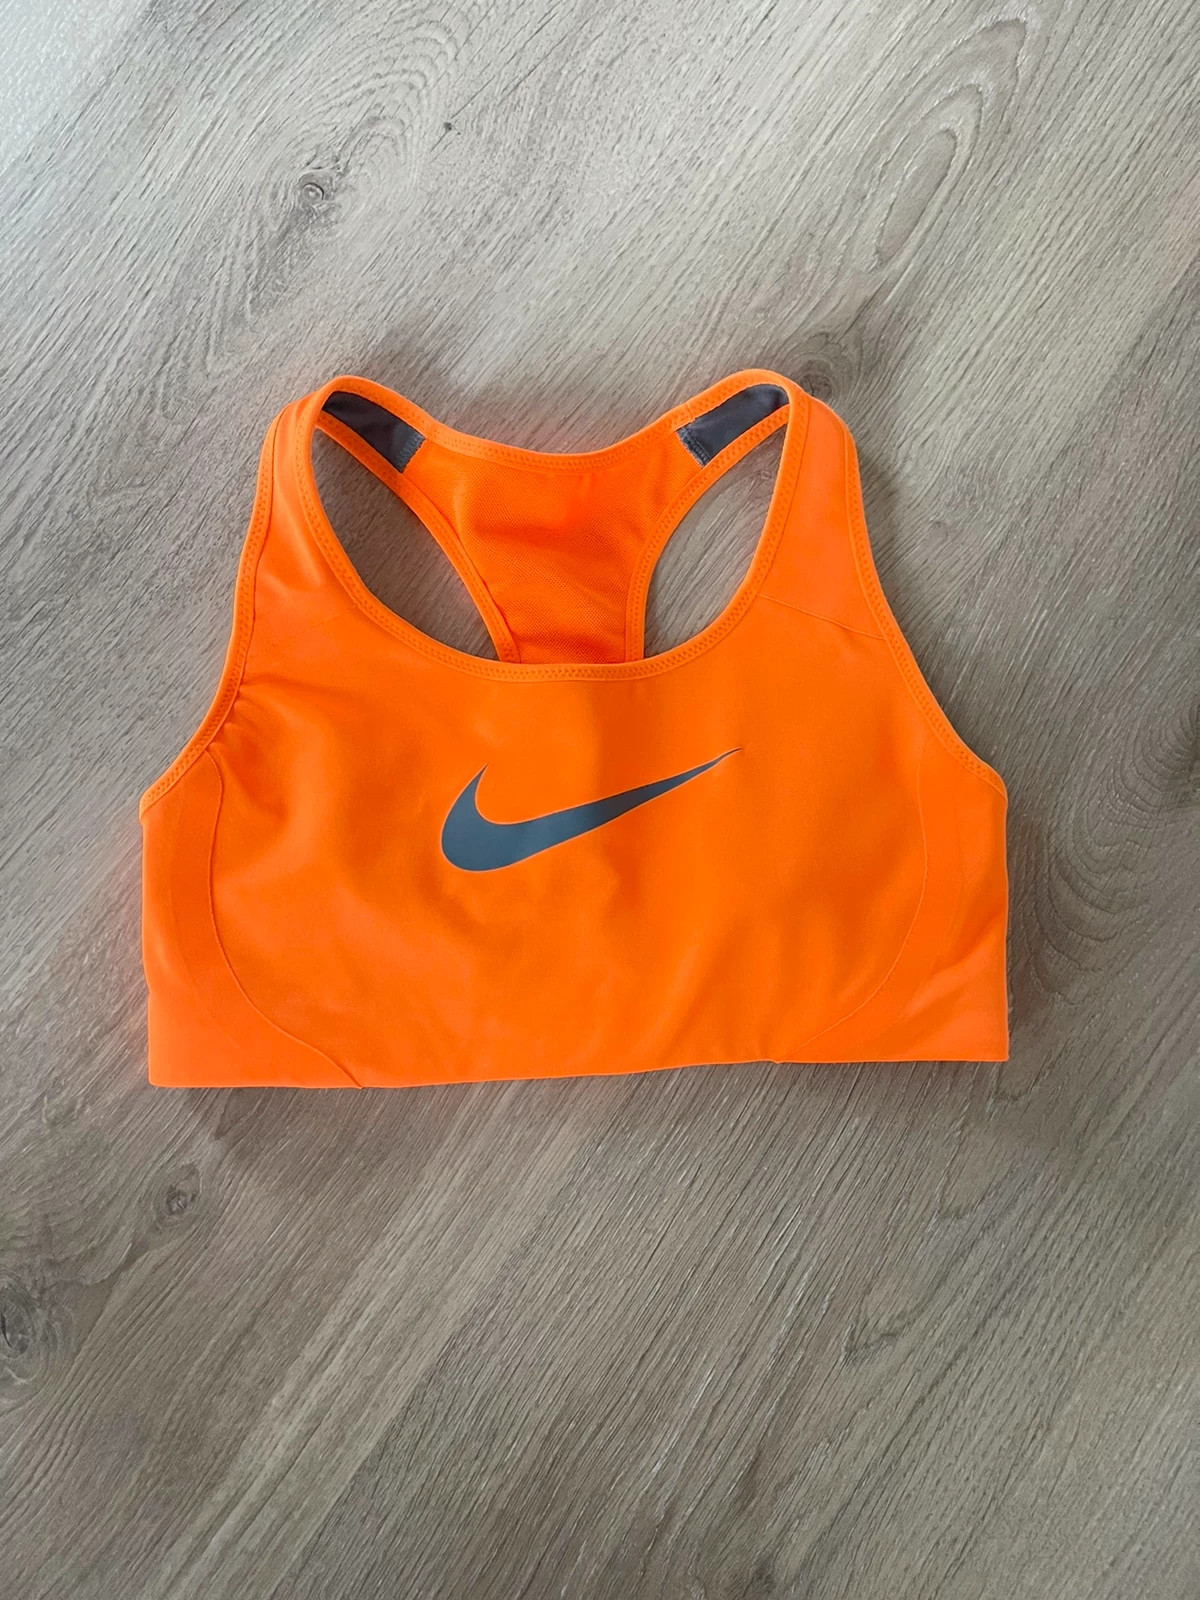 Orange Nike Pro Sports Bra Dri-fit Size Small